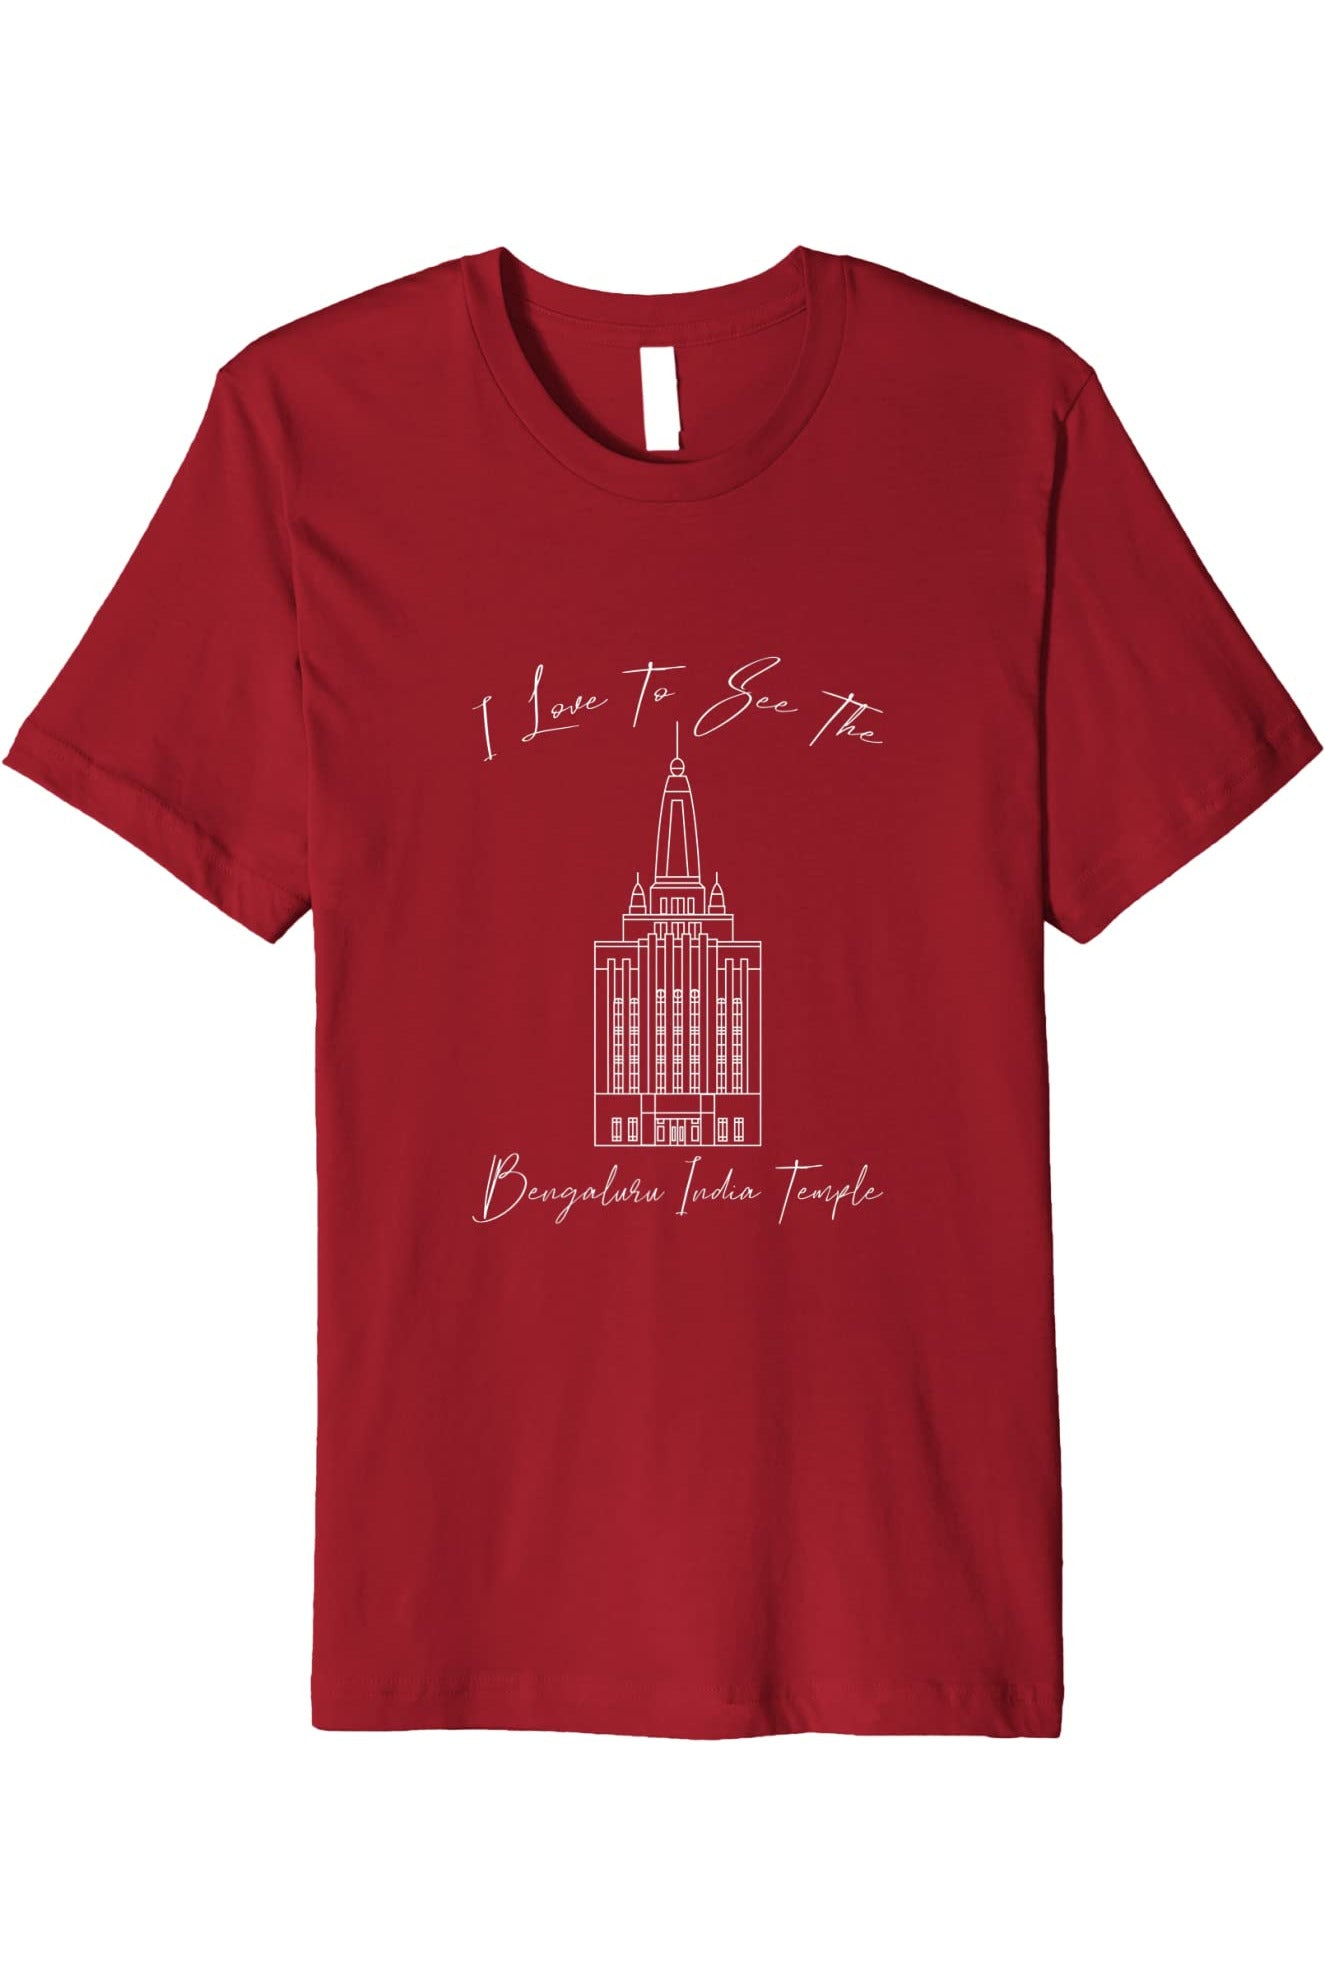 Bengaluru India Temple T-Shirt - Premium - Calligraphy Style (English) US